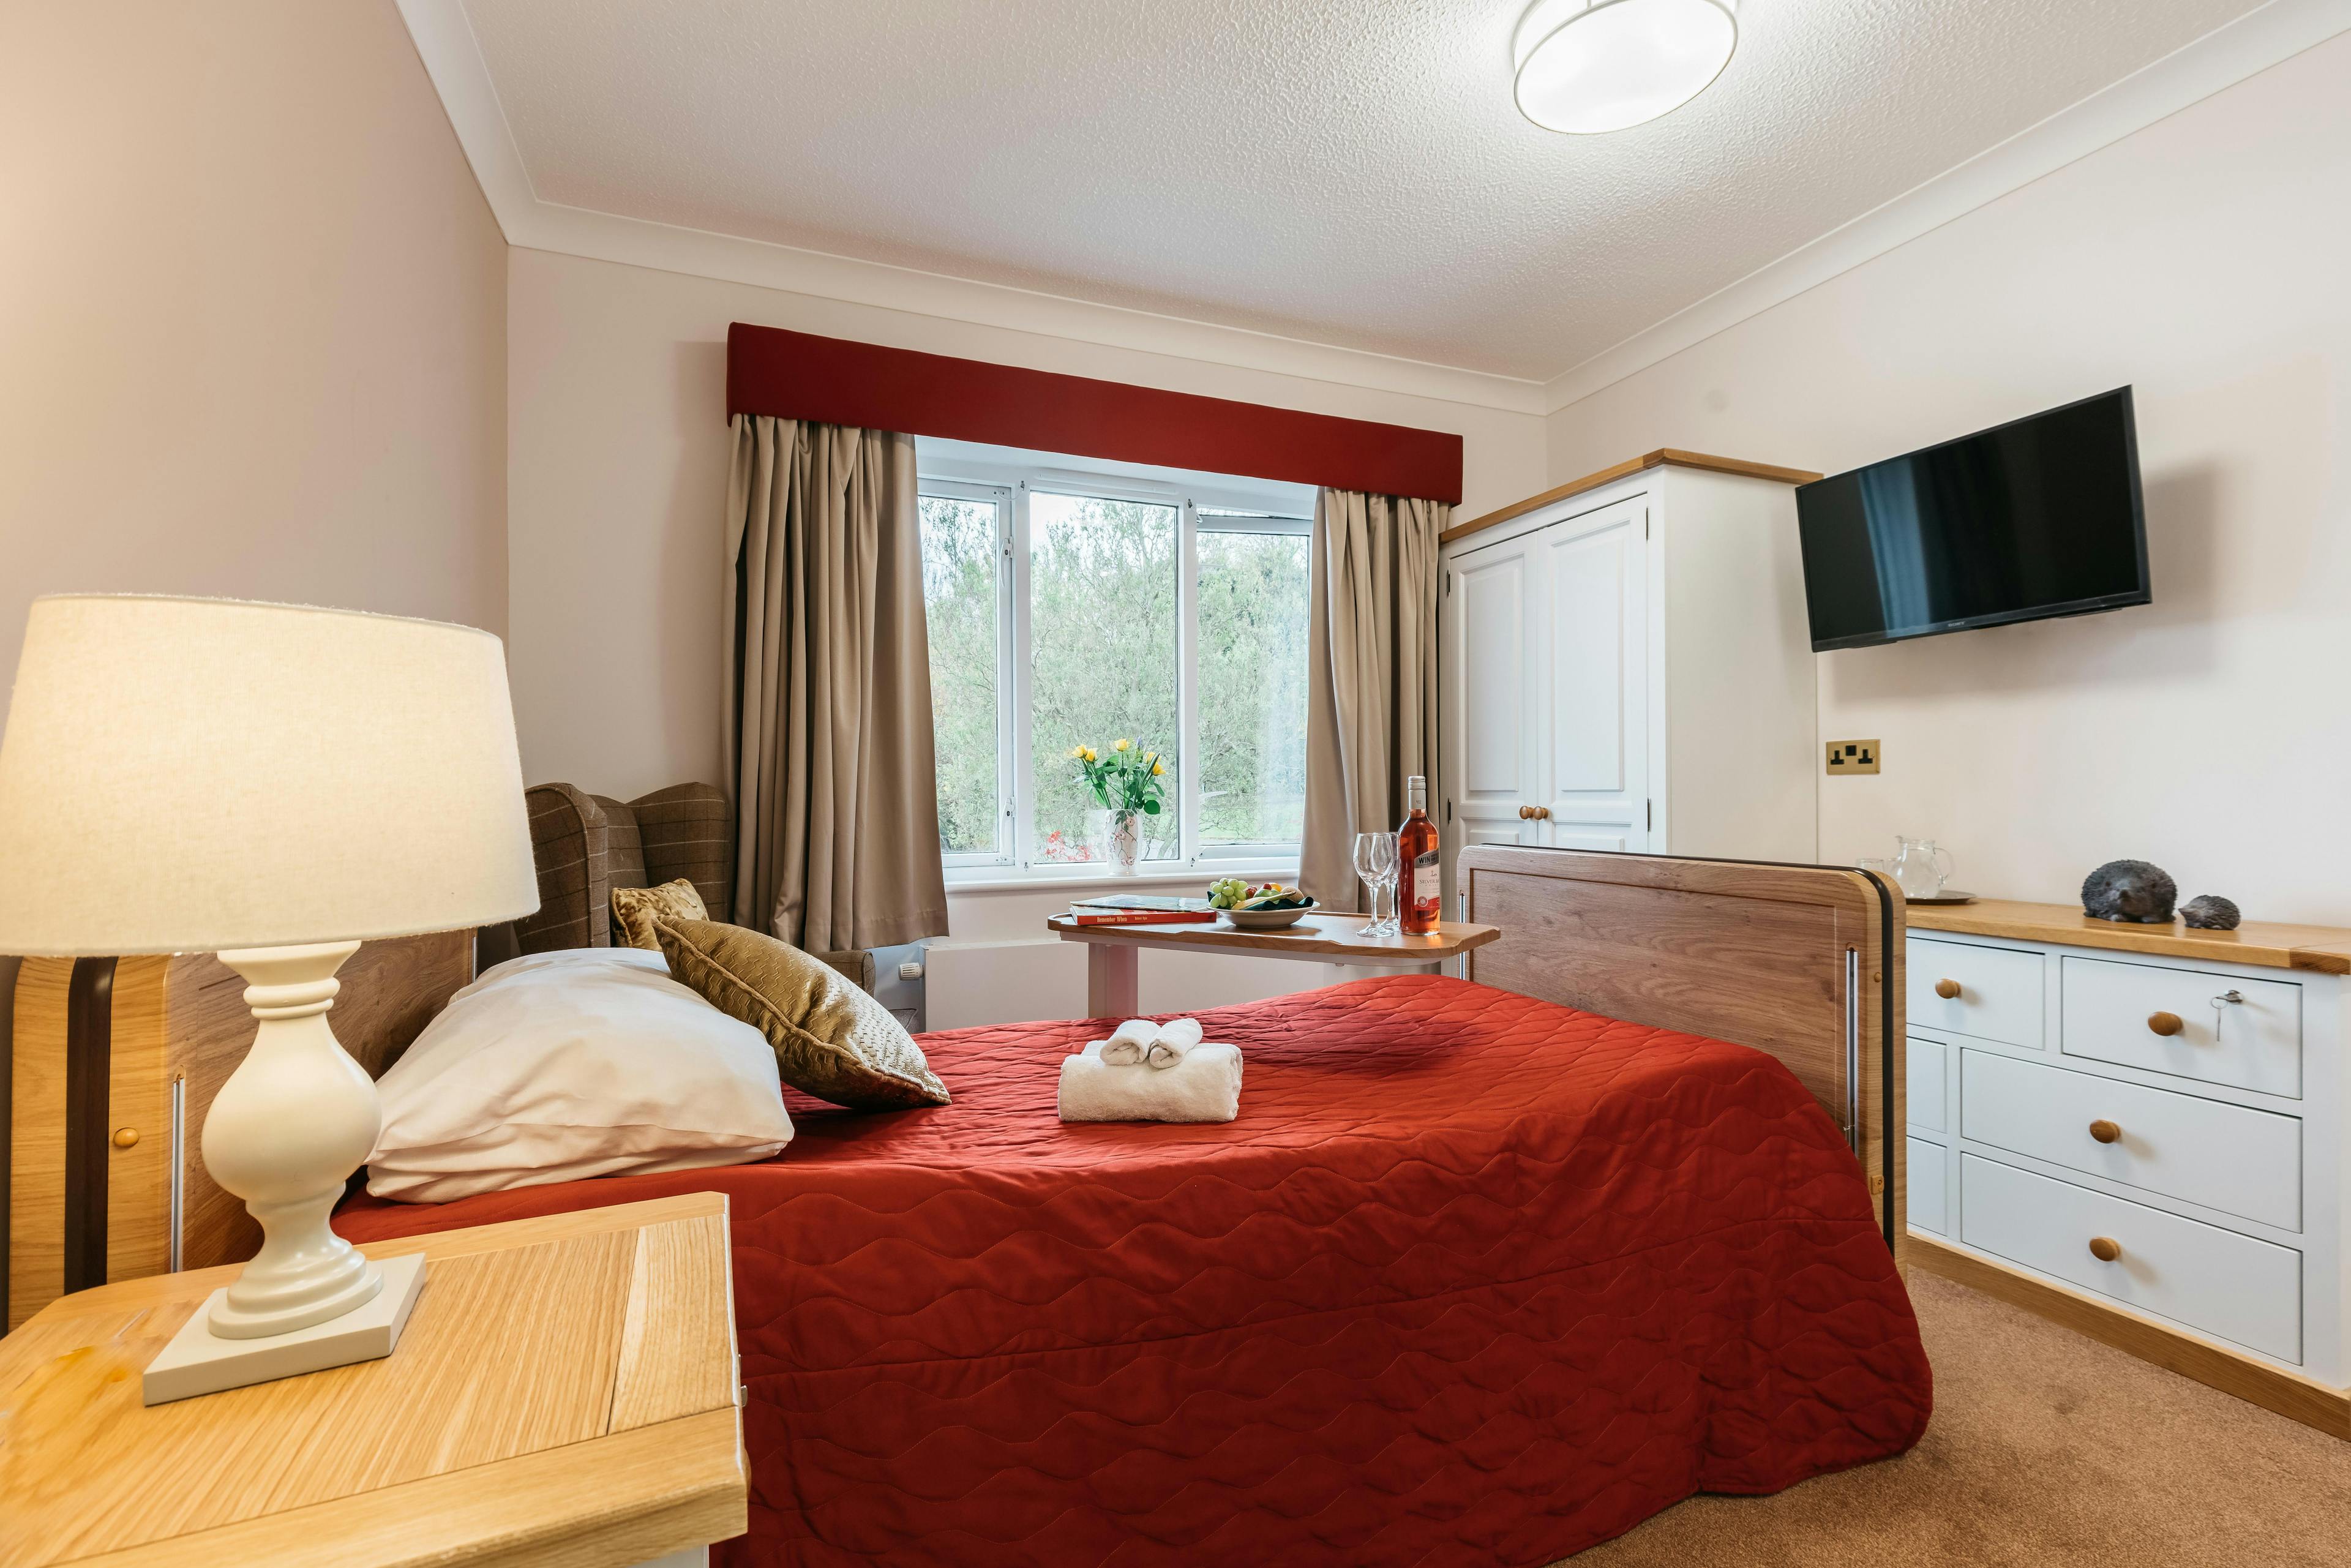 Bedroom at Strachan House Care Home in Edinburgh, Scotland